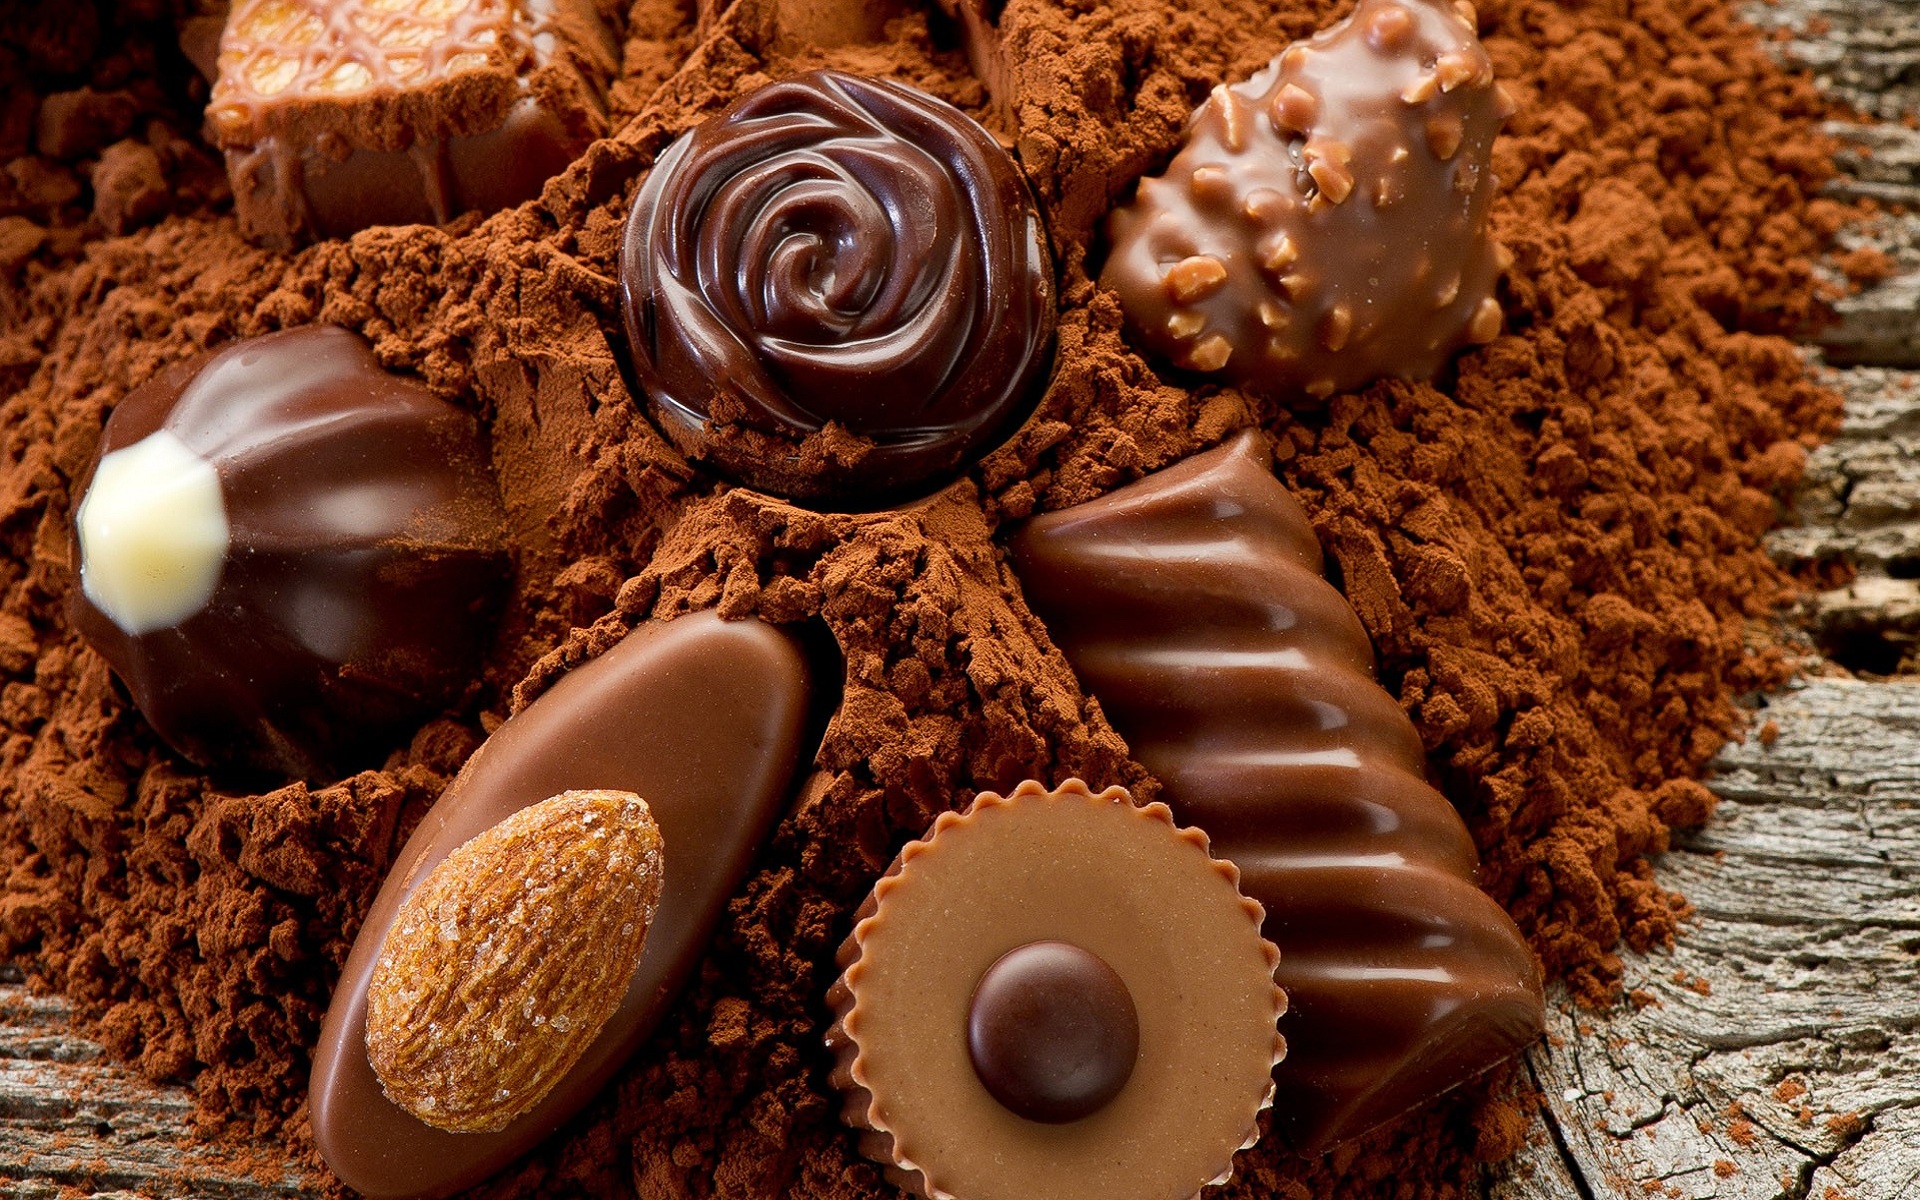 chocolate wallpaper hd,food,chocolate truffle,chocolate,praline,confectionery